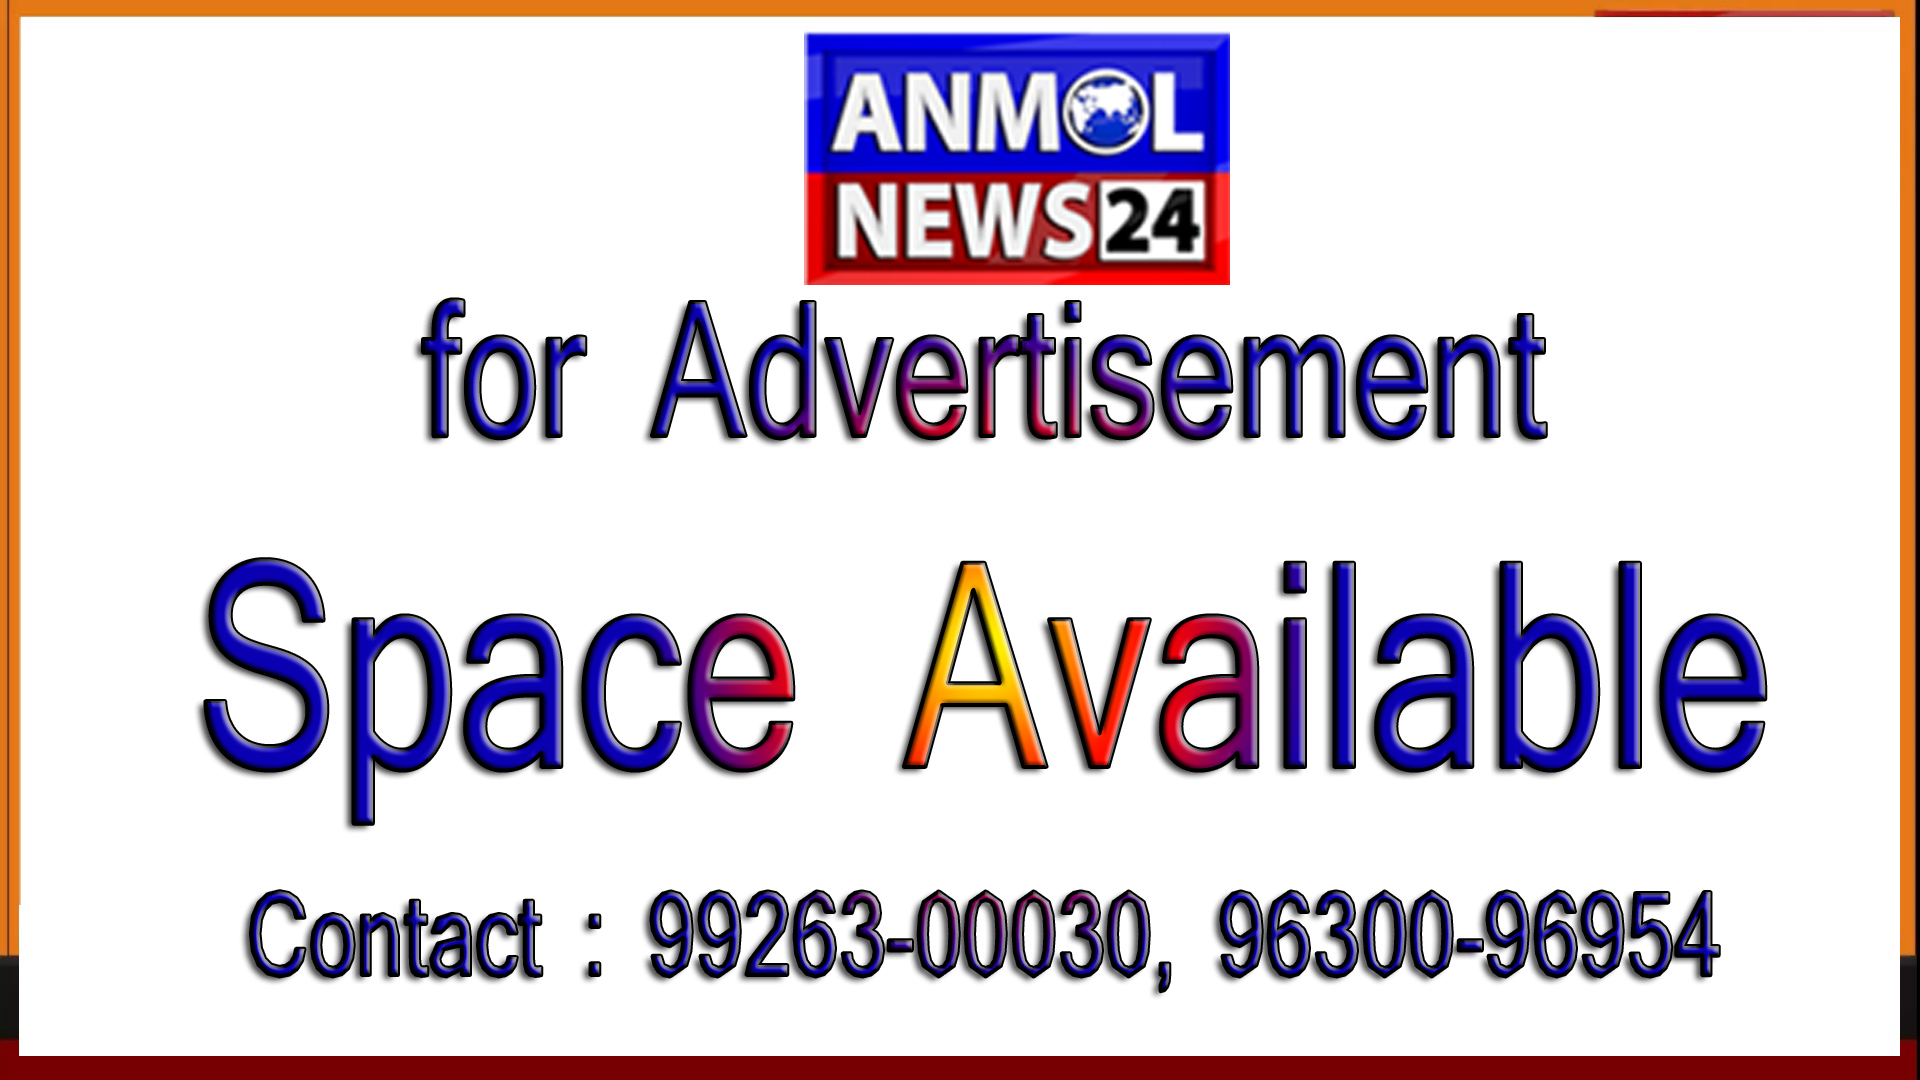 Anmol News24 Advt Space